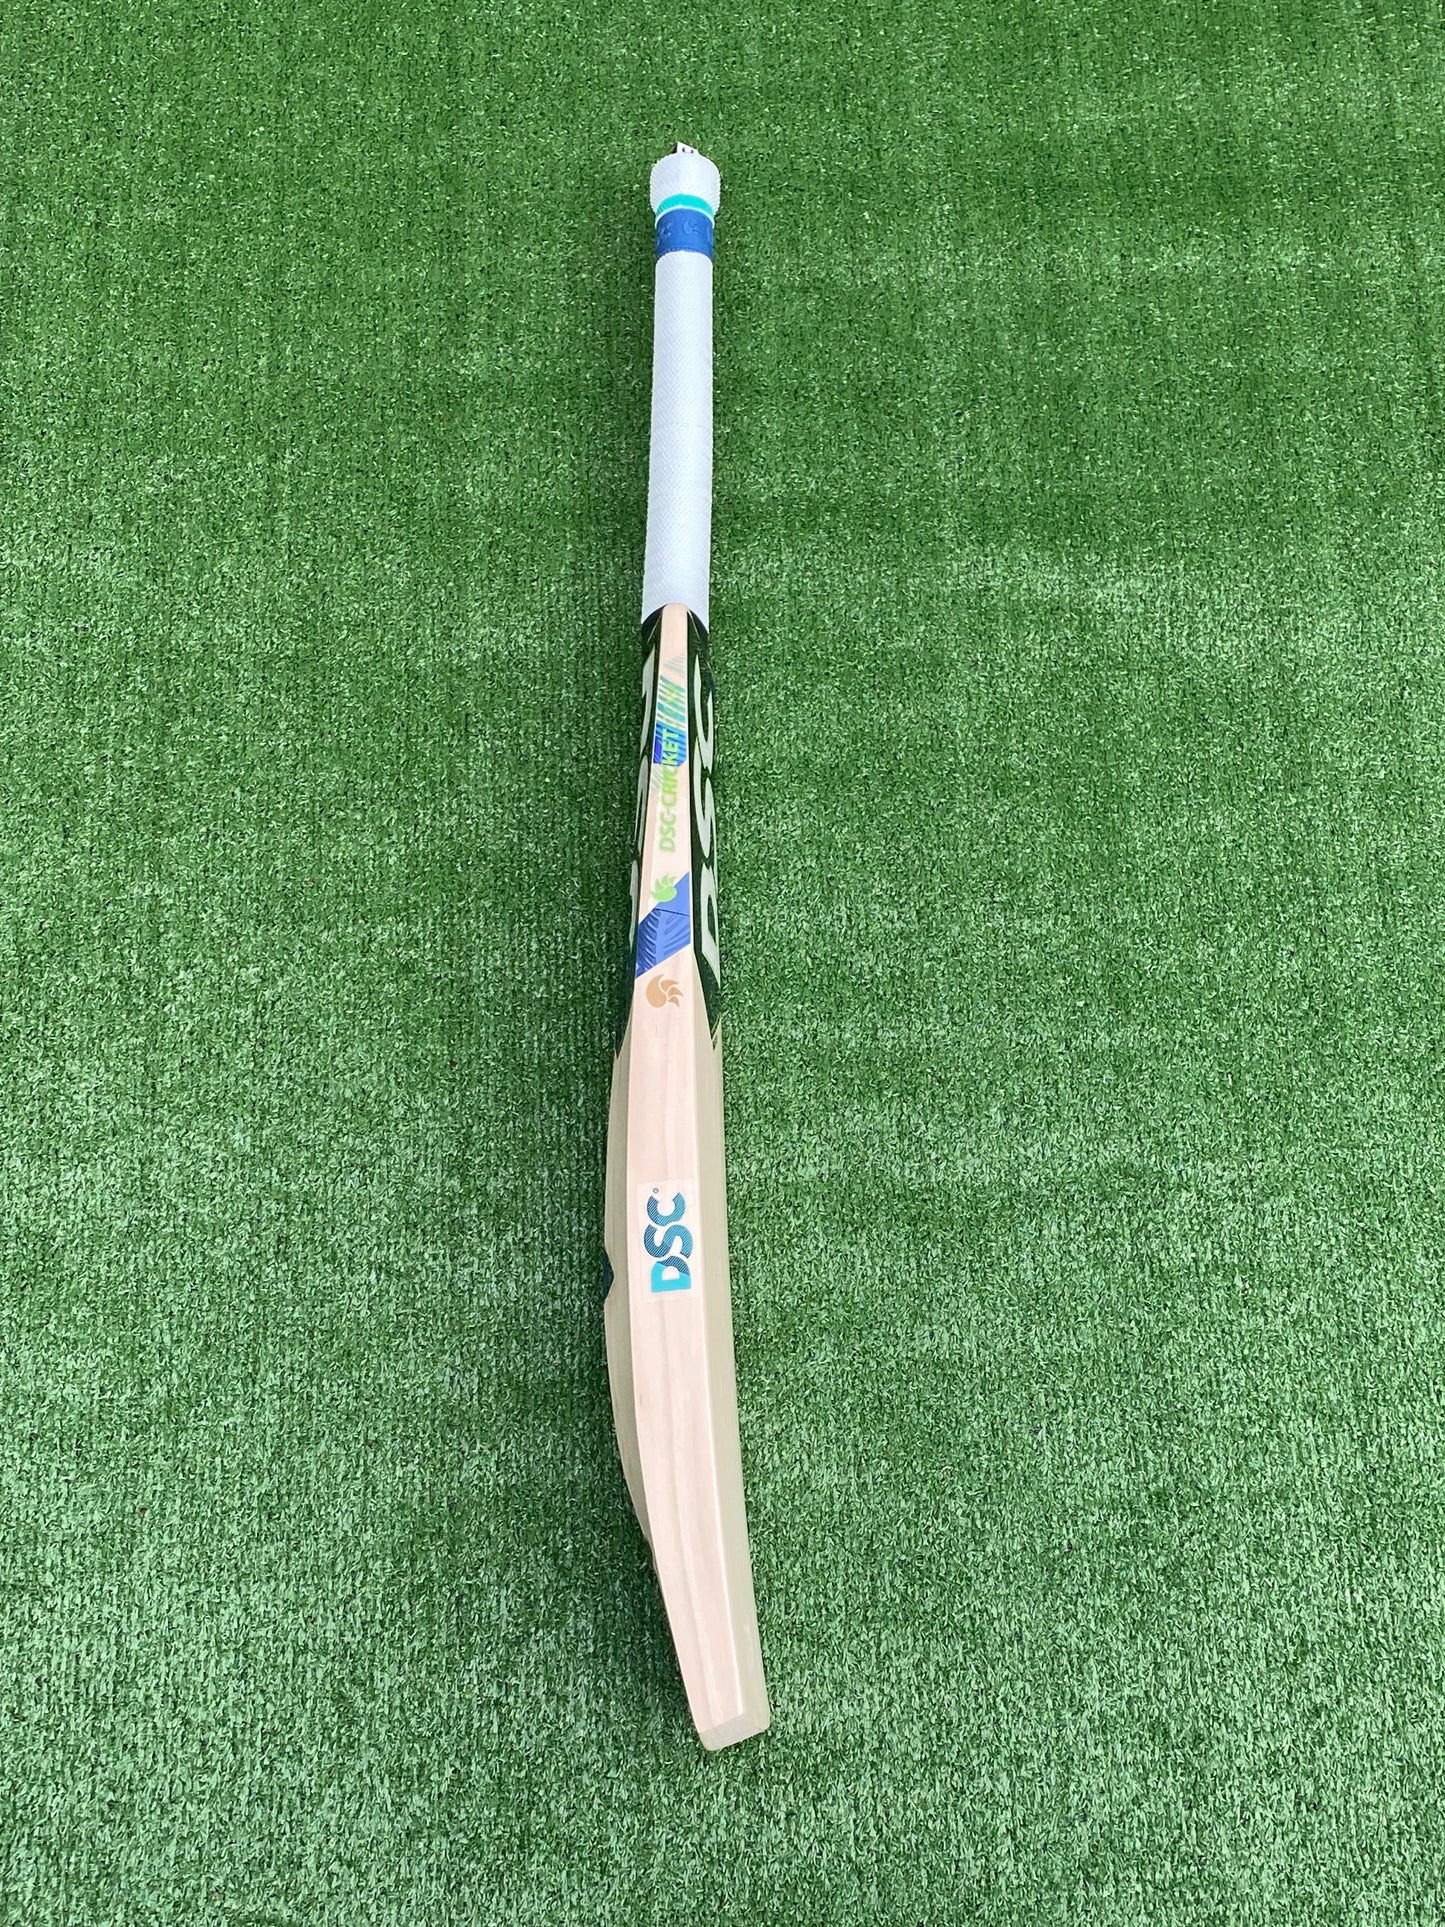 DSC Blu Cricket Bat